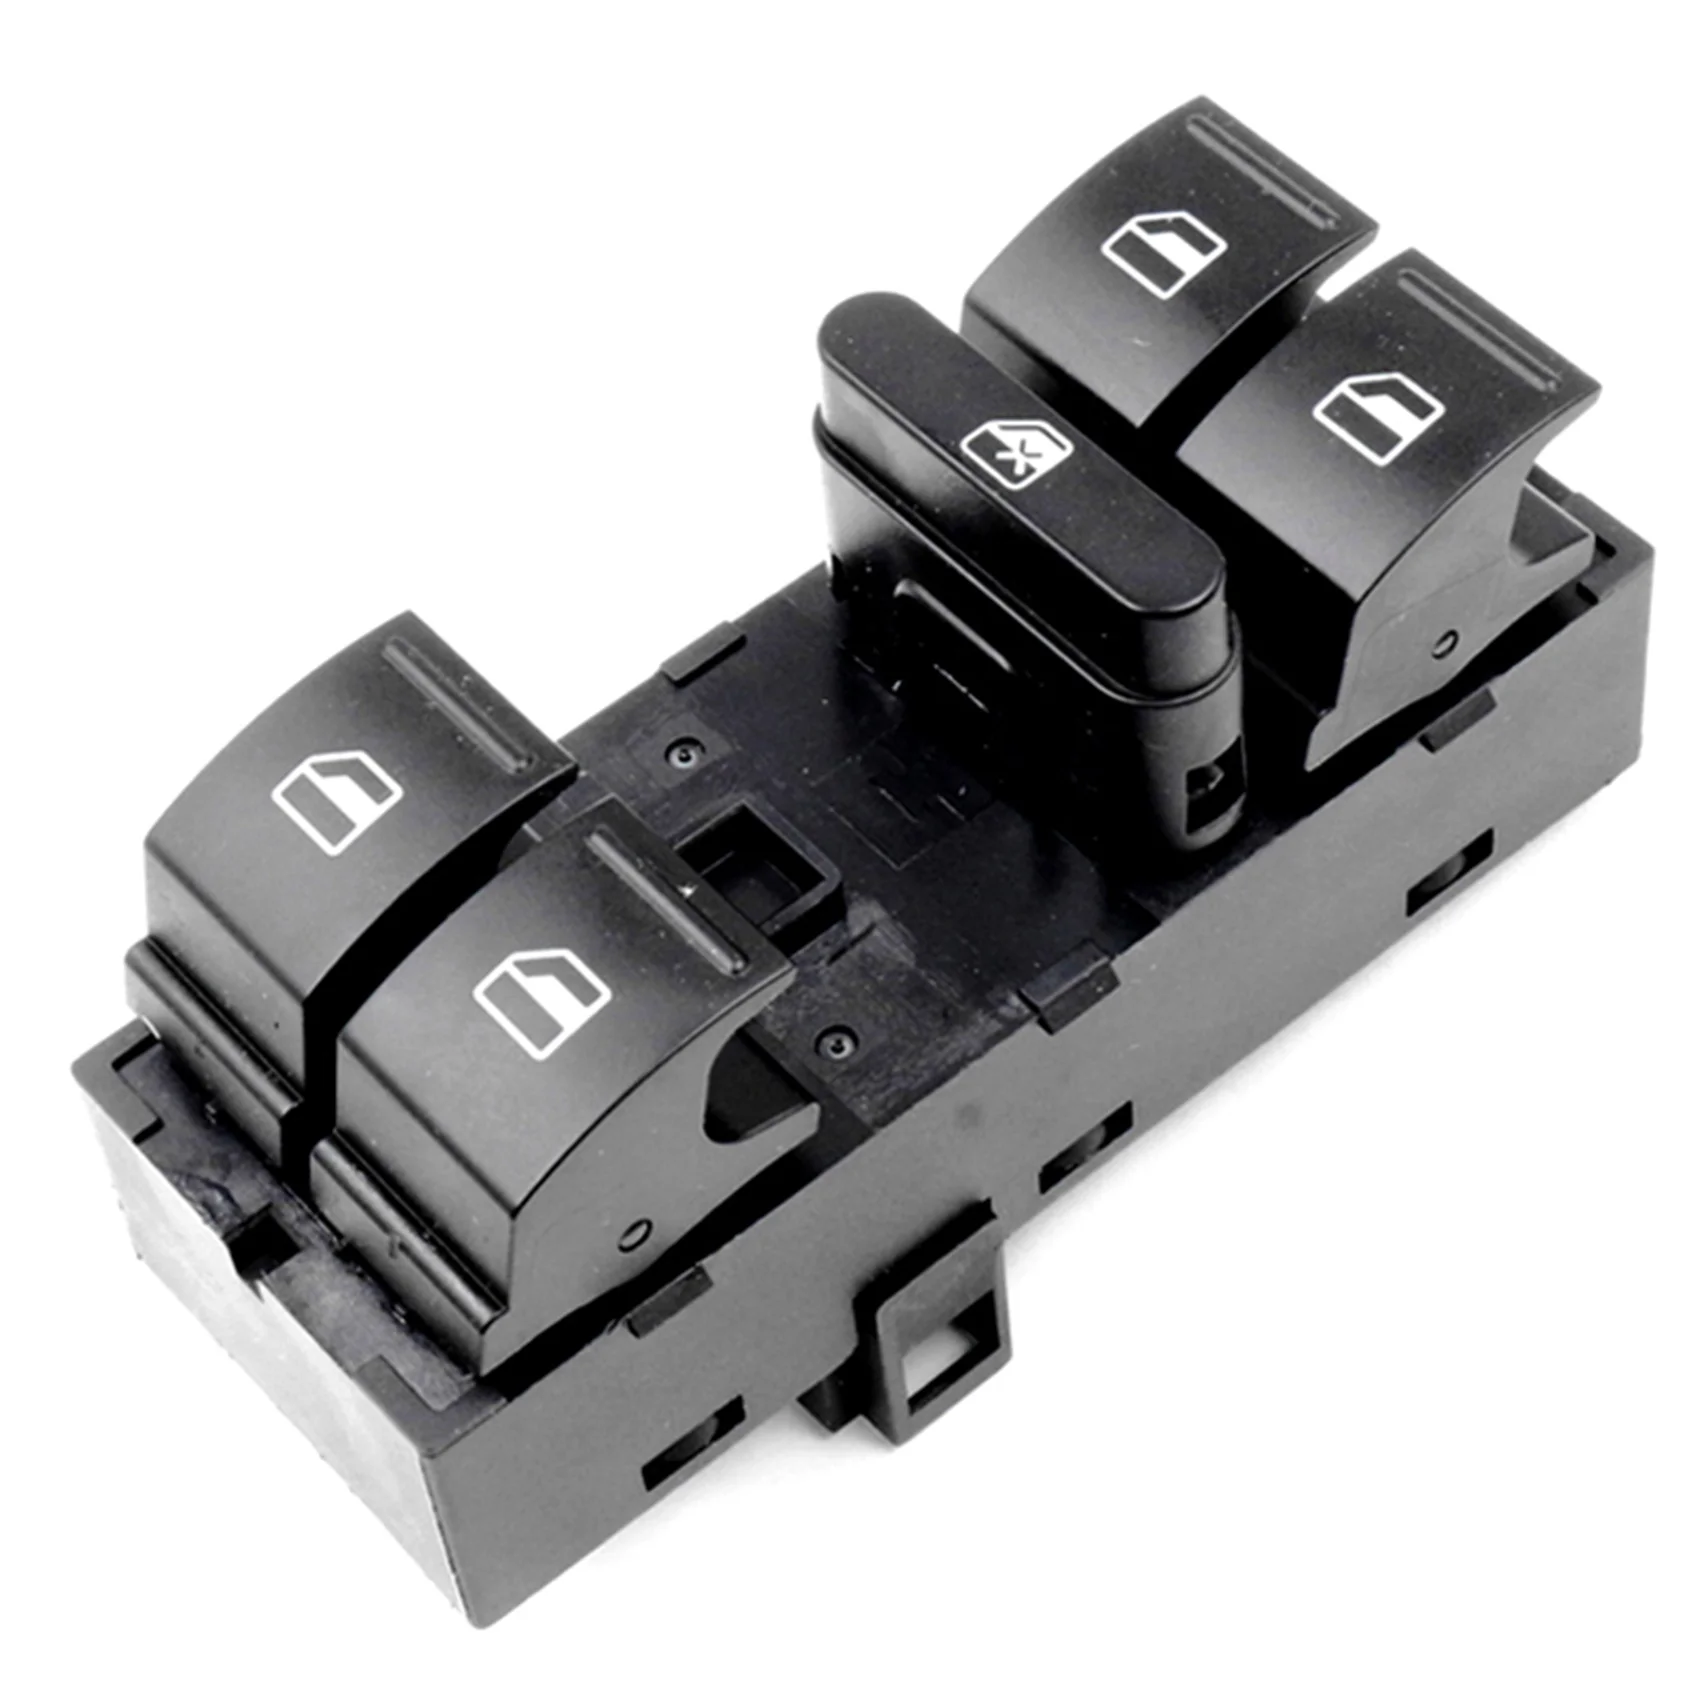 

6RD959857D Power Window Regulator Switch for-Audi-Volkswagen Passat B7 Car Console Control Switch Button 6RD 959 857